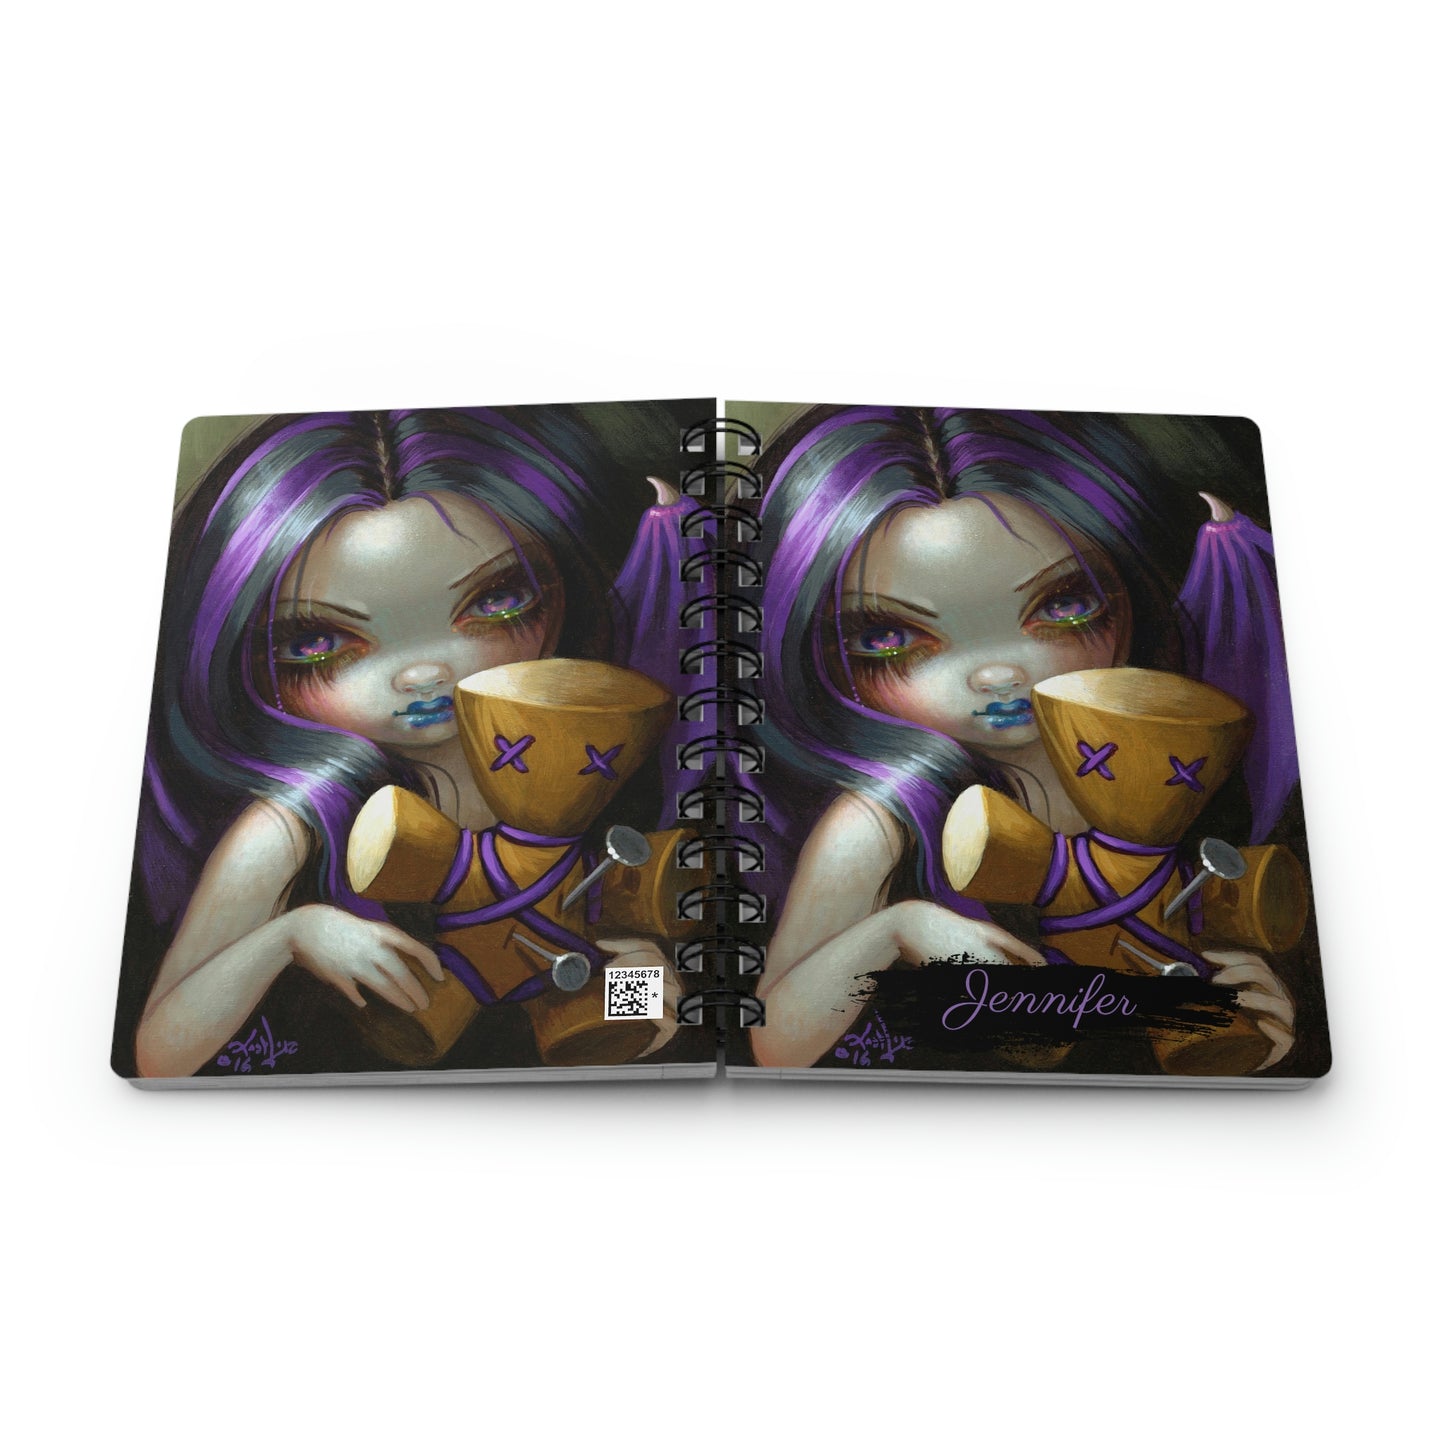 Custom Voodoo Girl Spiral Bound Journal